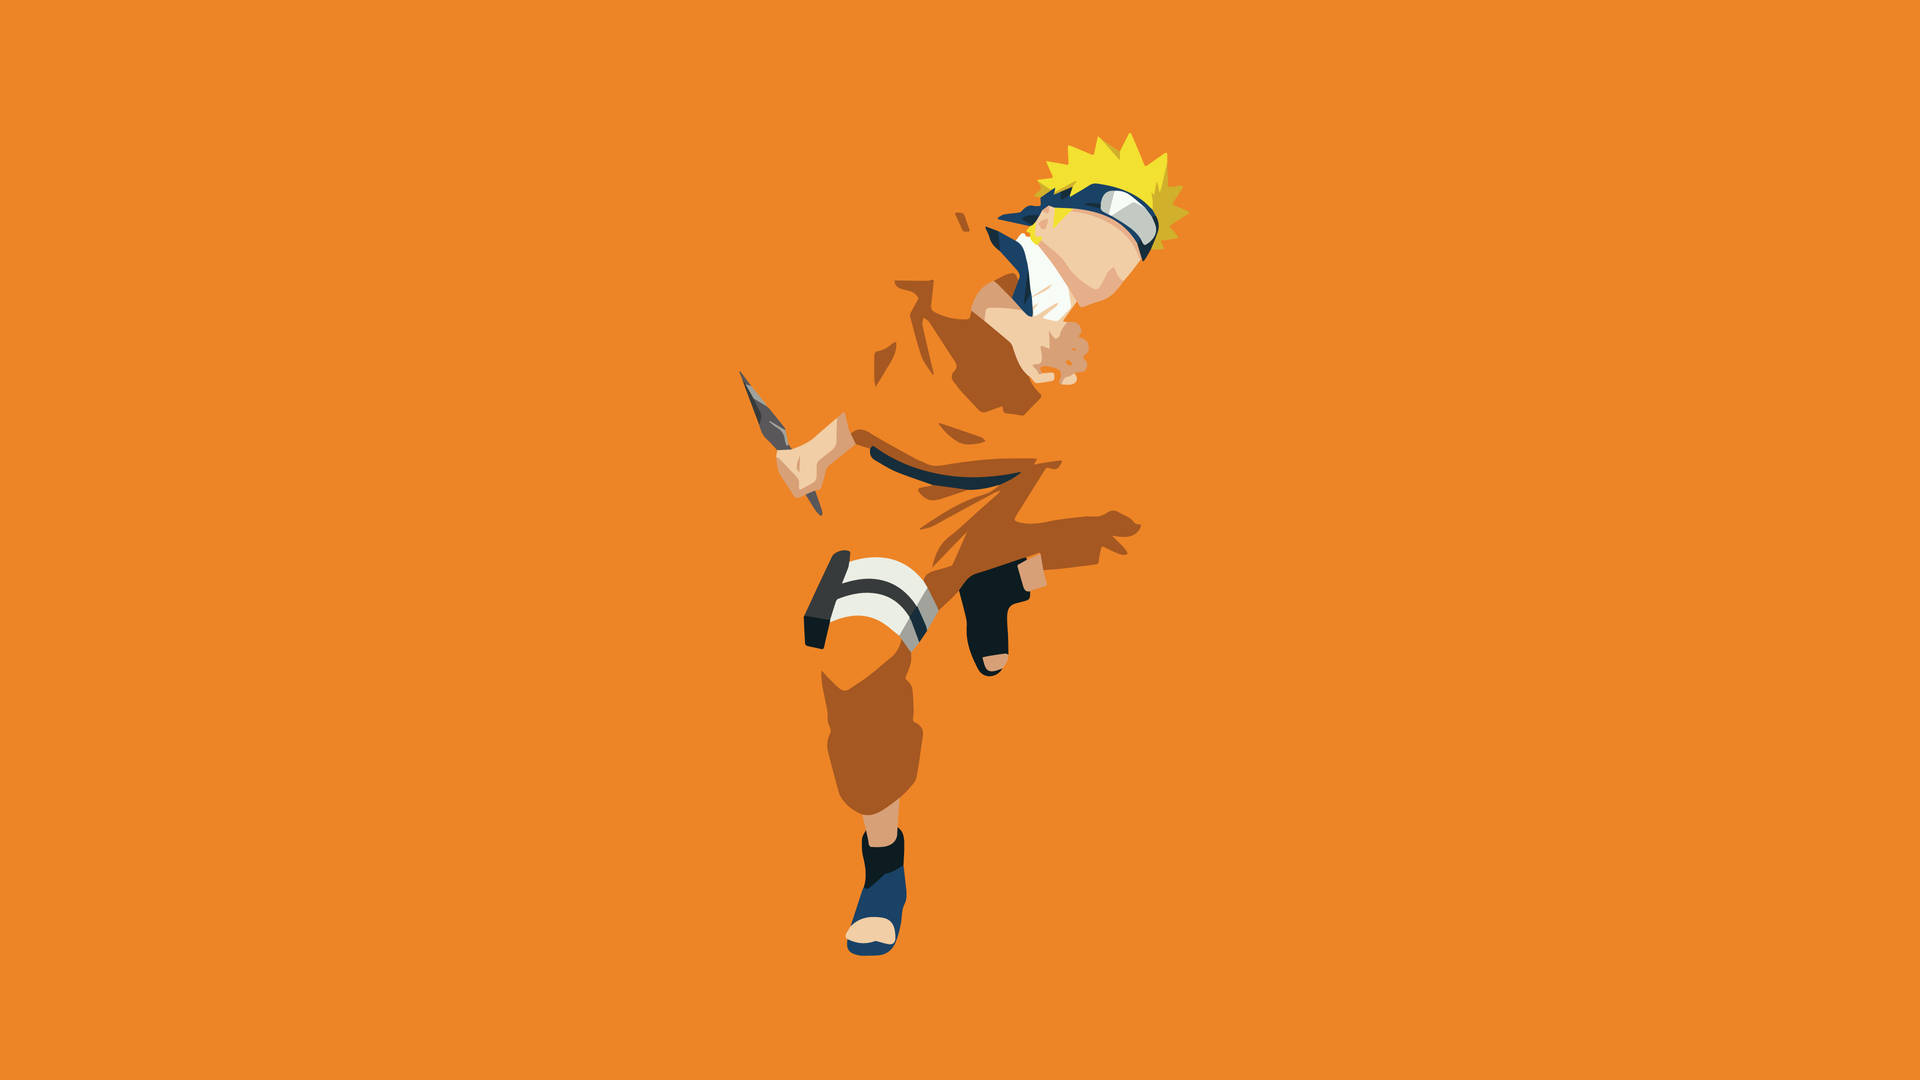 Download Faceless Hokage Naruto 4k Pc Artwork Wallpaper